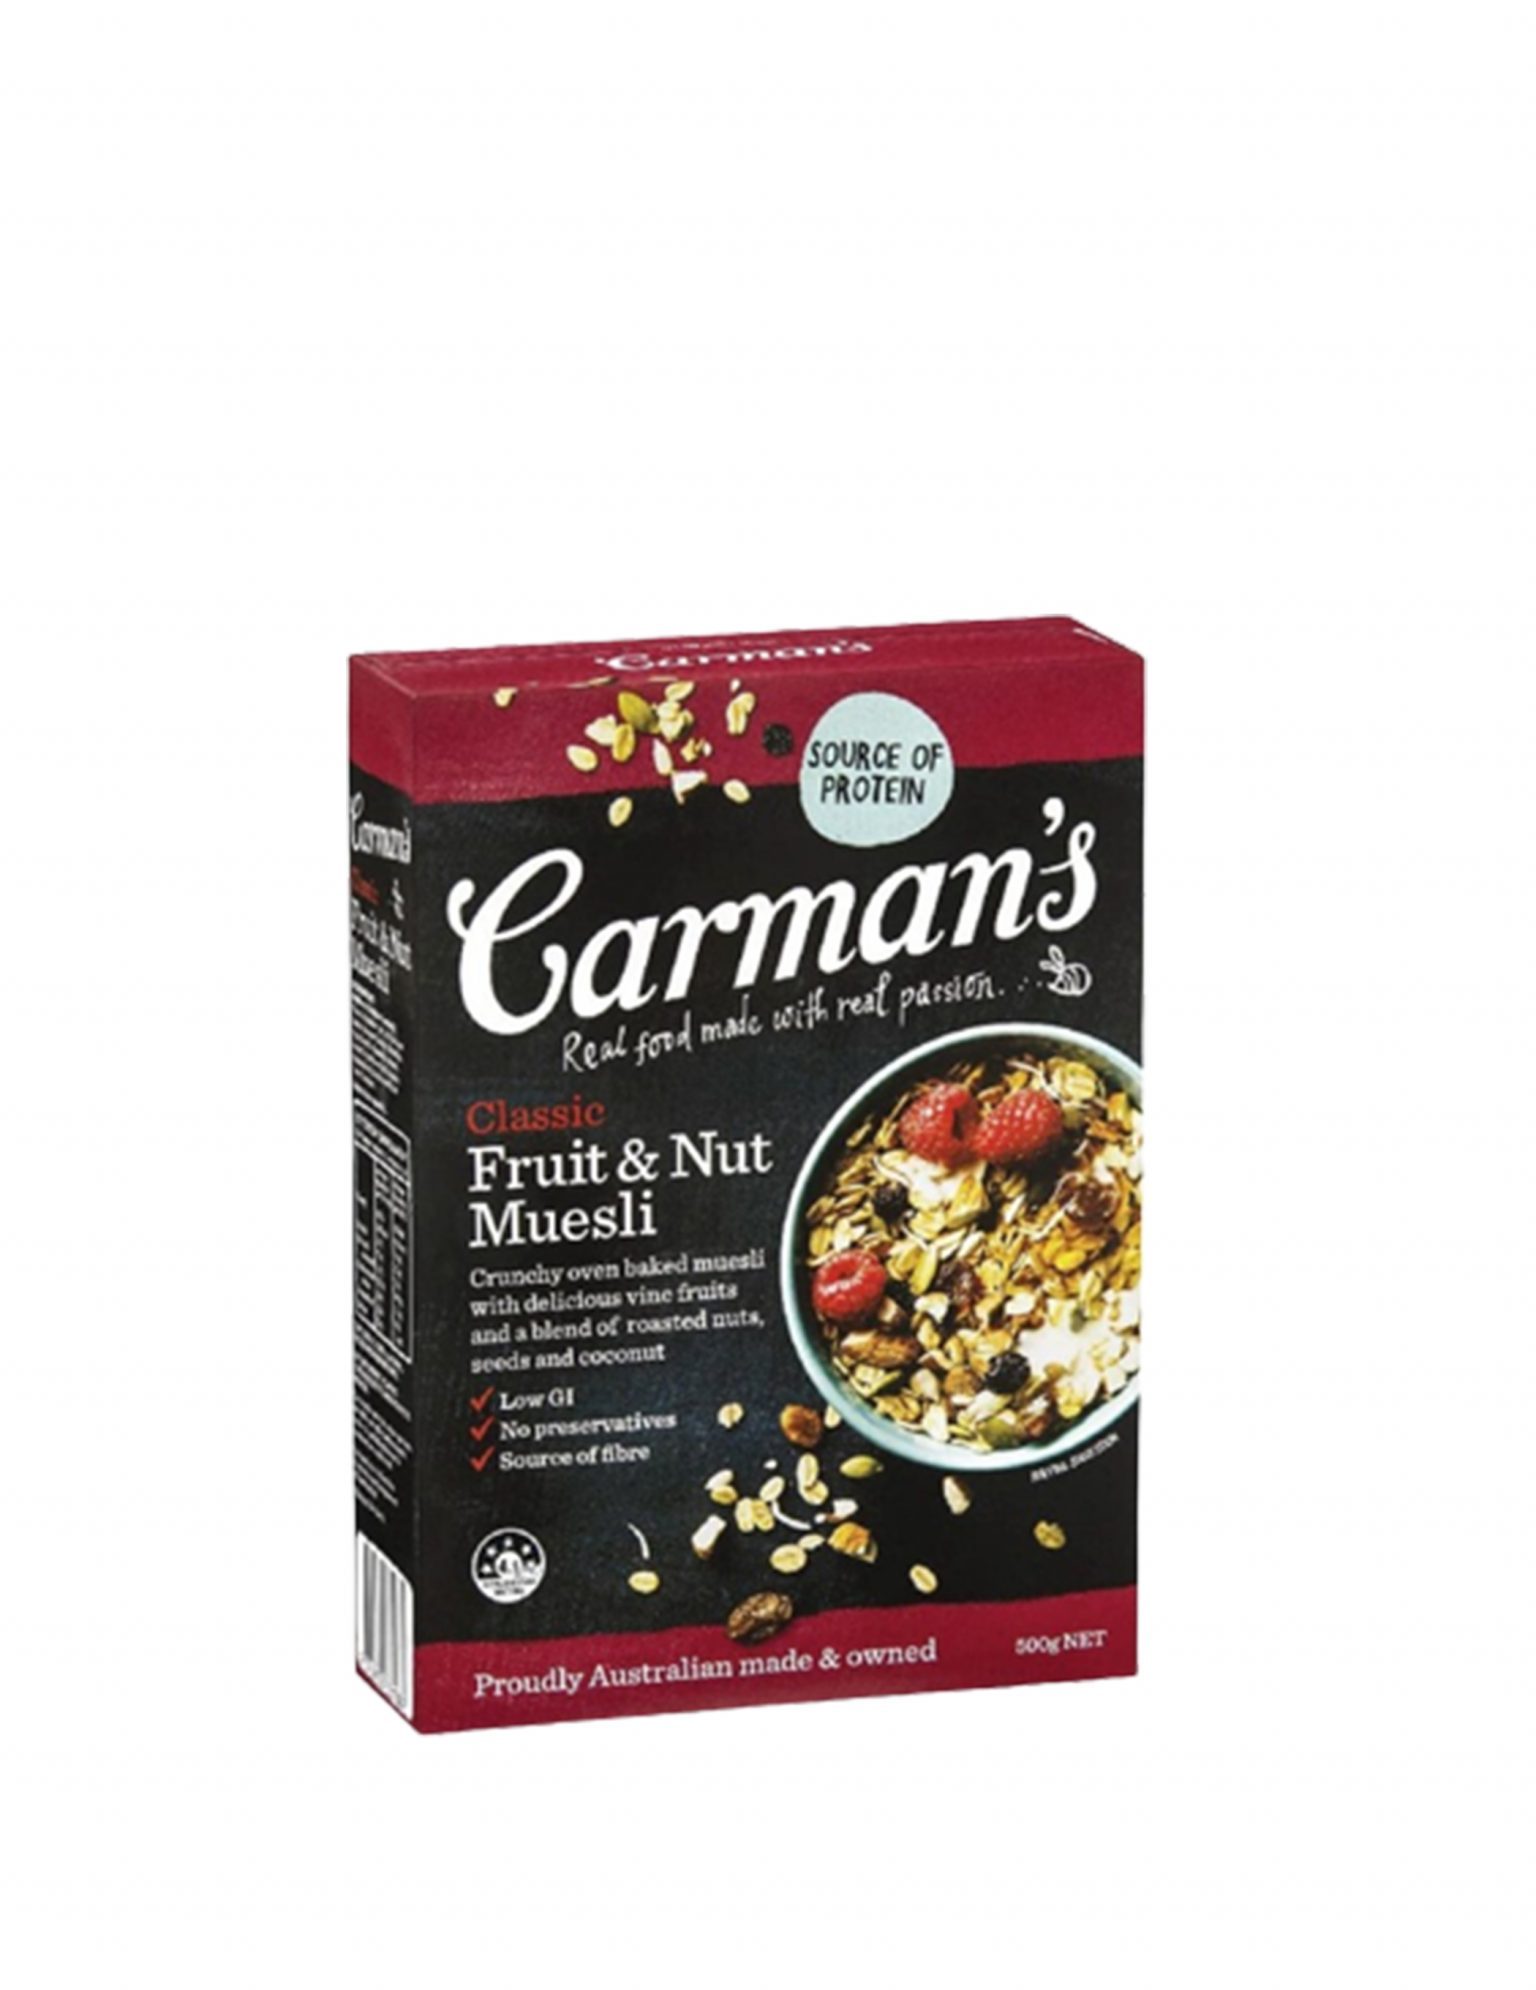 Carman's Fruit & Nut Muesli-image